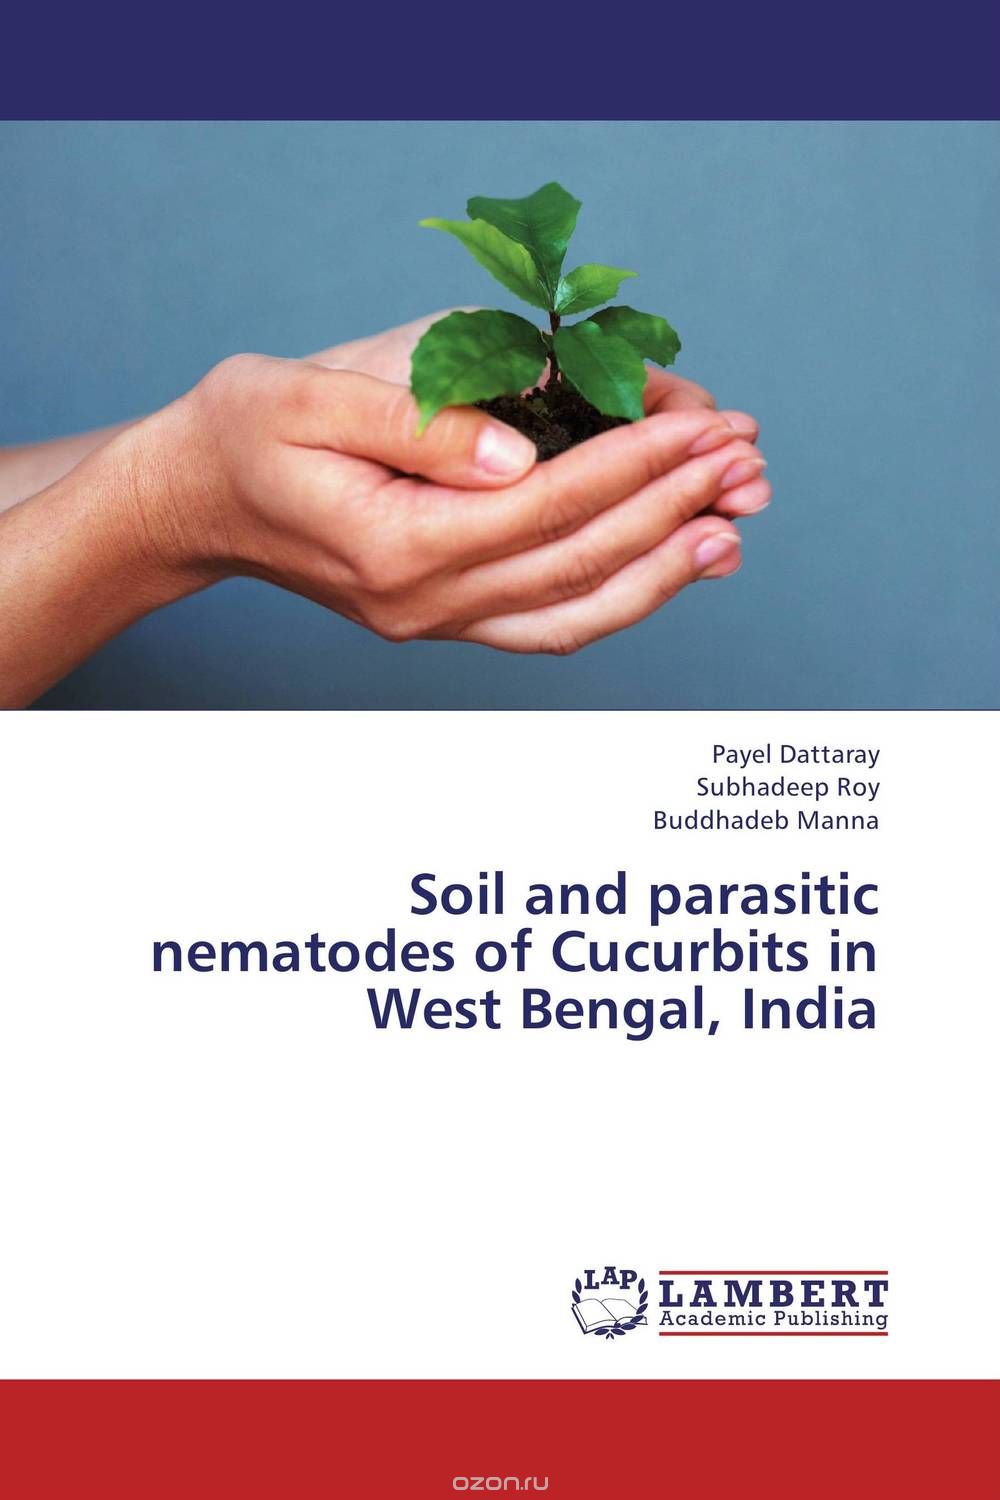 Soil and parasitic nematodes of Cucurbits in West Bengal, India